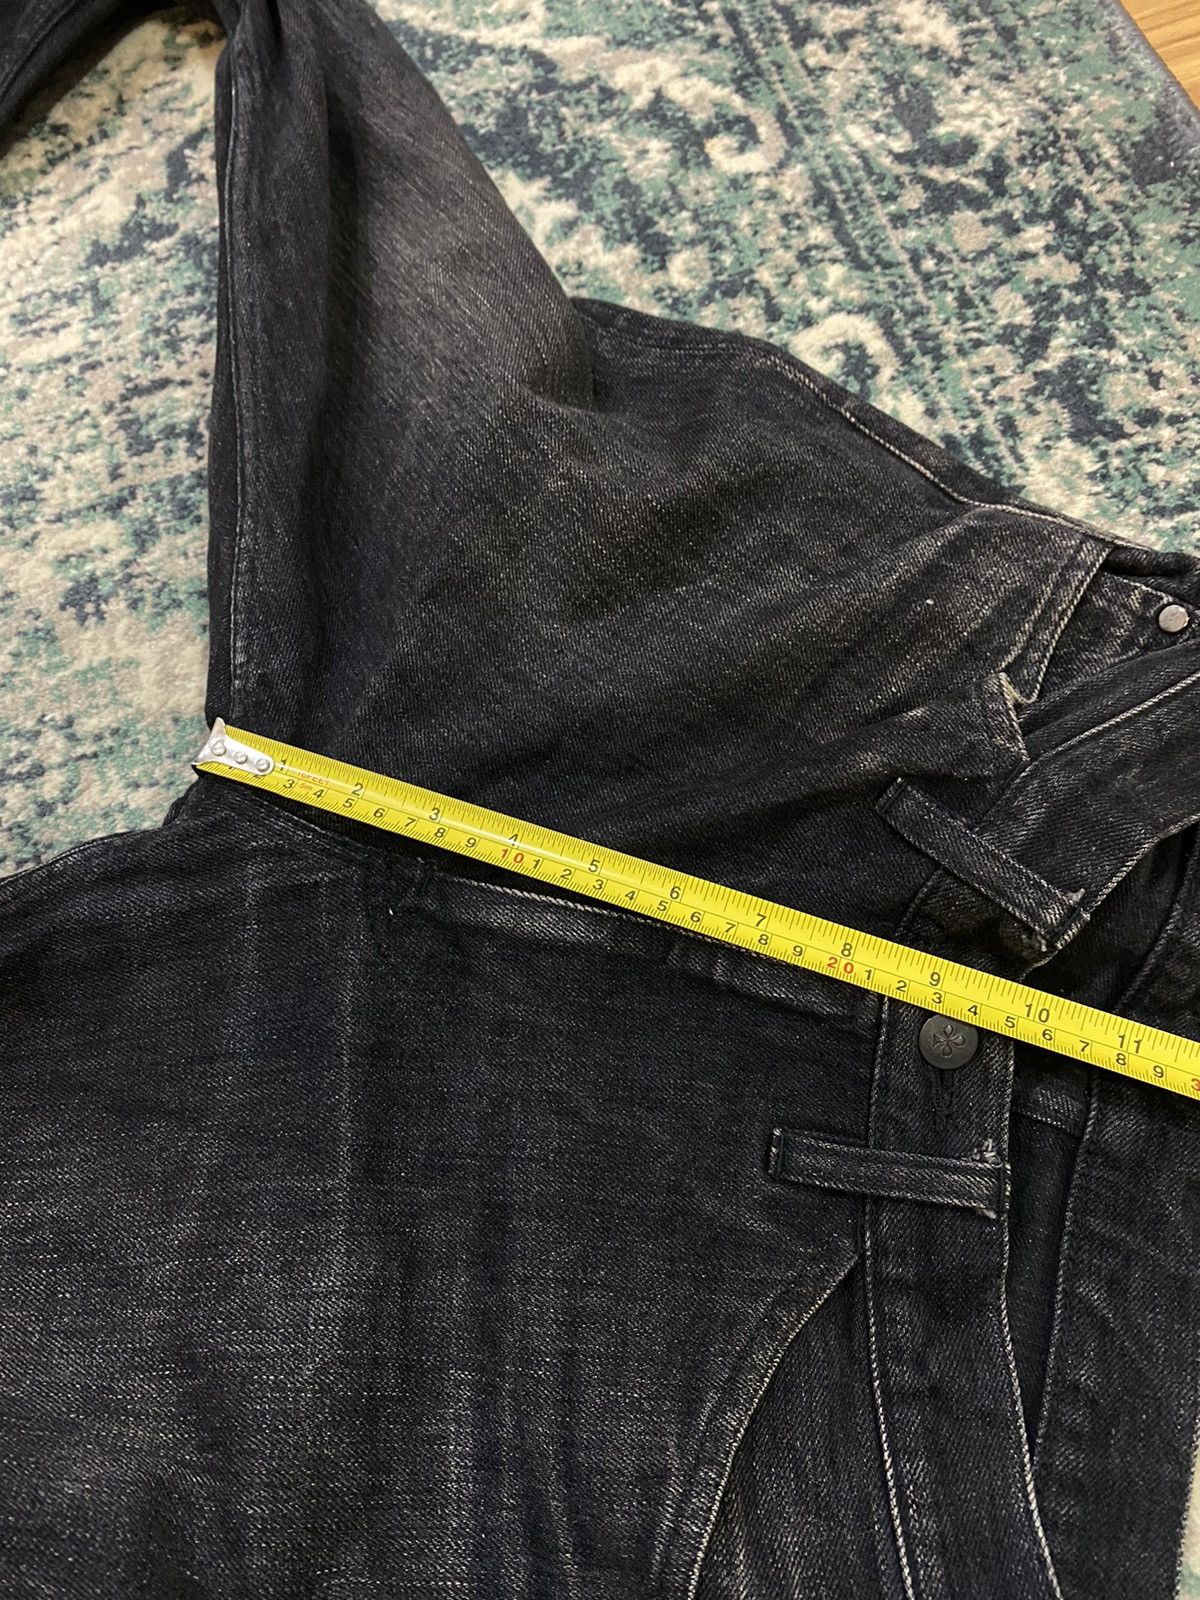 Lemaire Black Leather Lining Pocket Jeans - 16